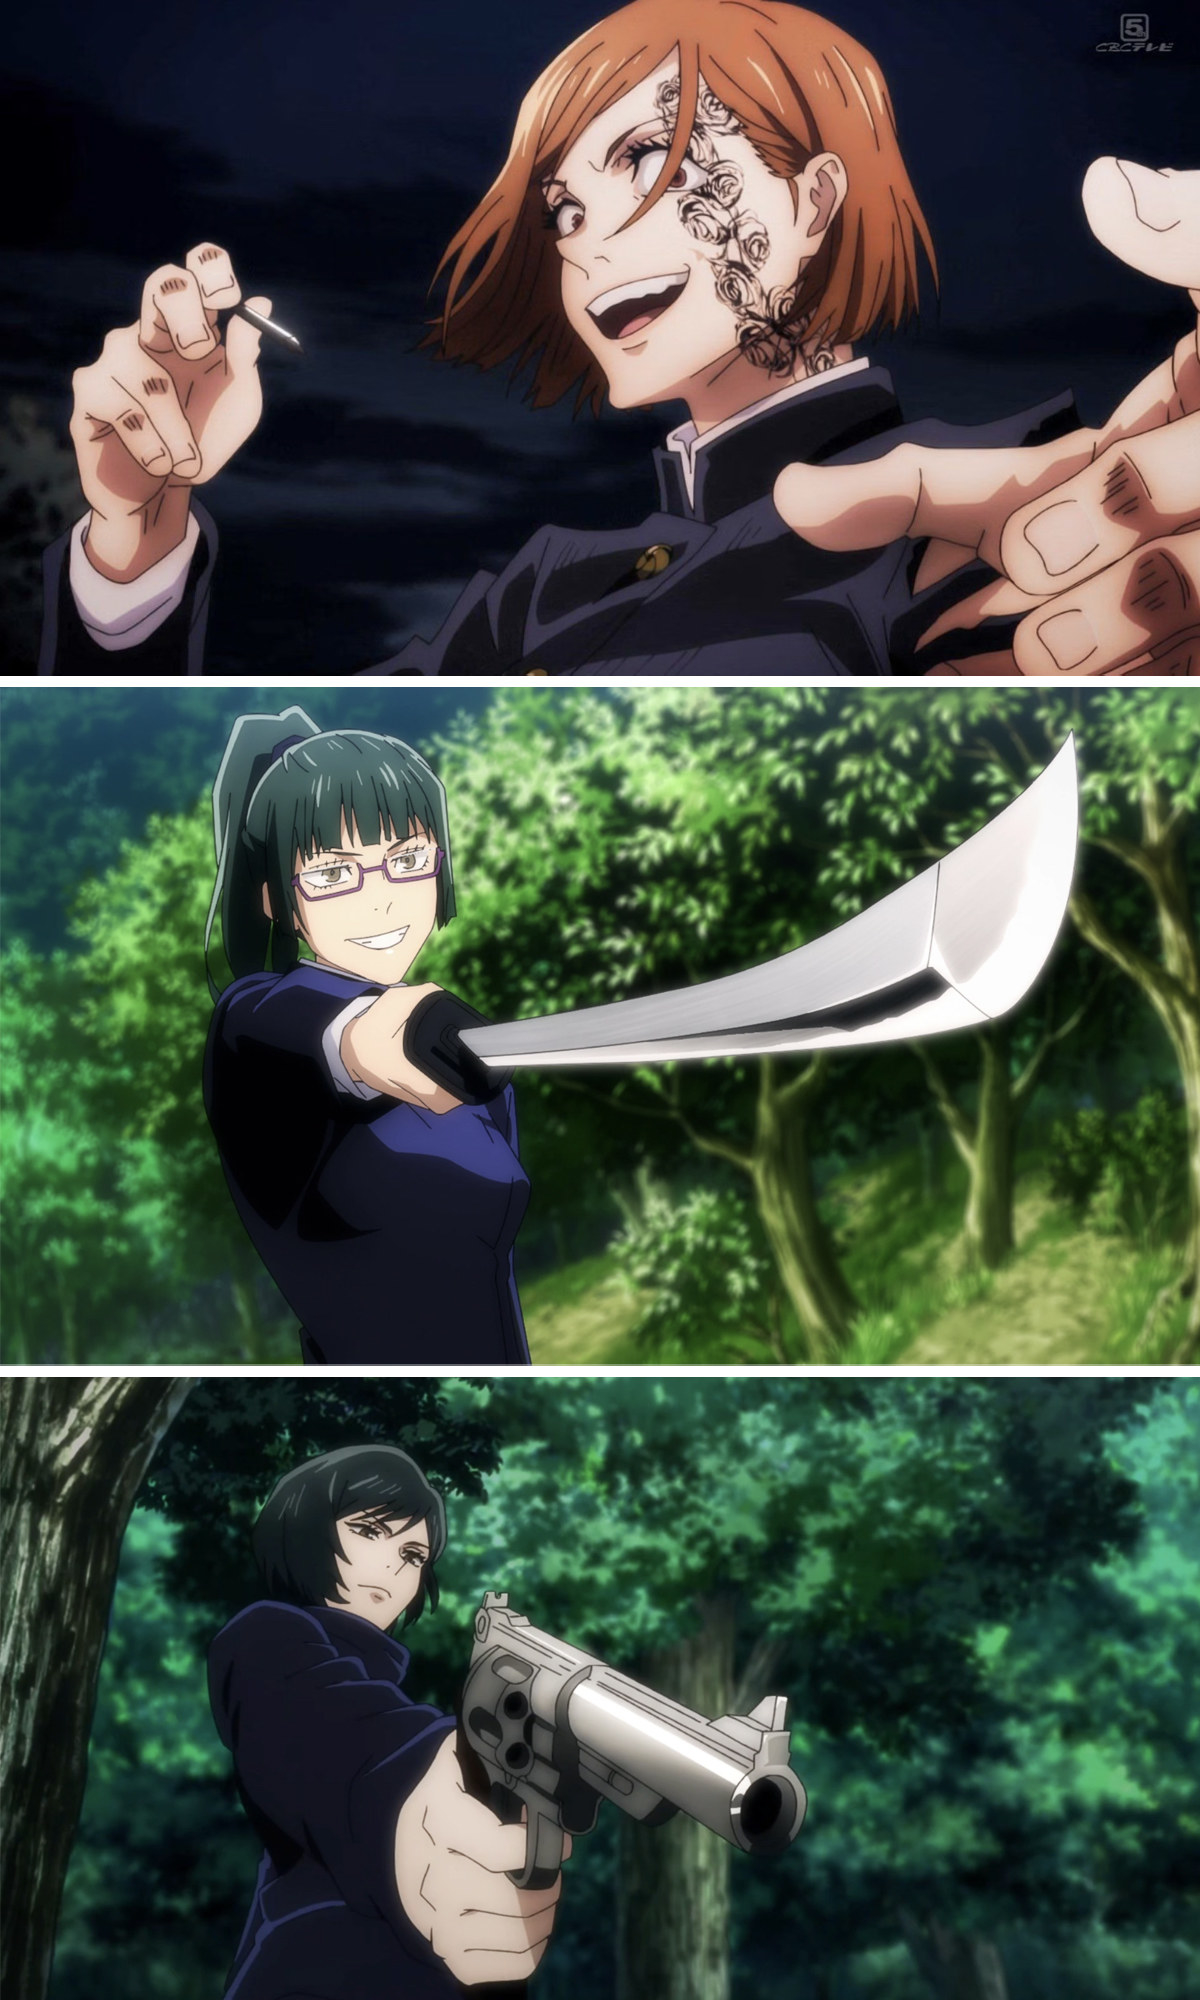 Top-bottom: Nobara, Maki and Mai from Jujutusu Kaisen wielding their weapons